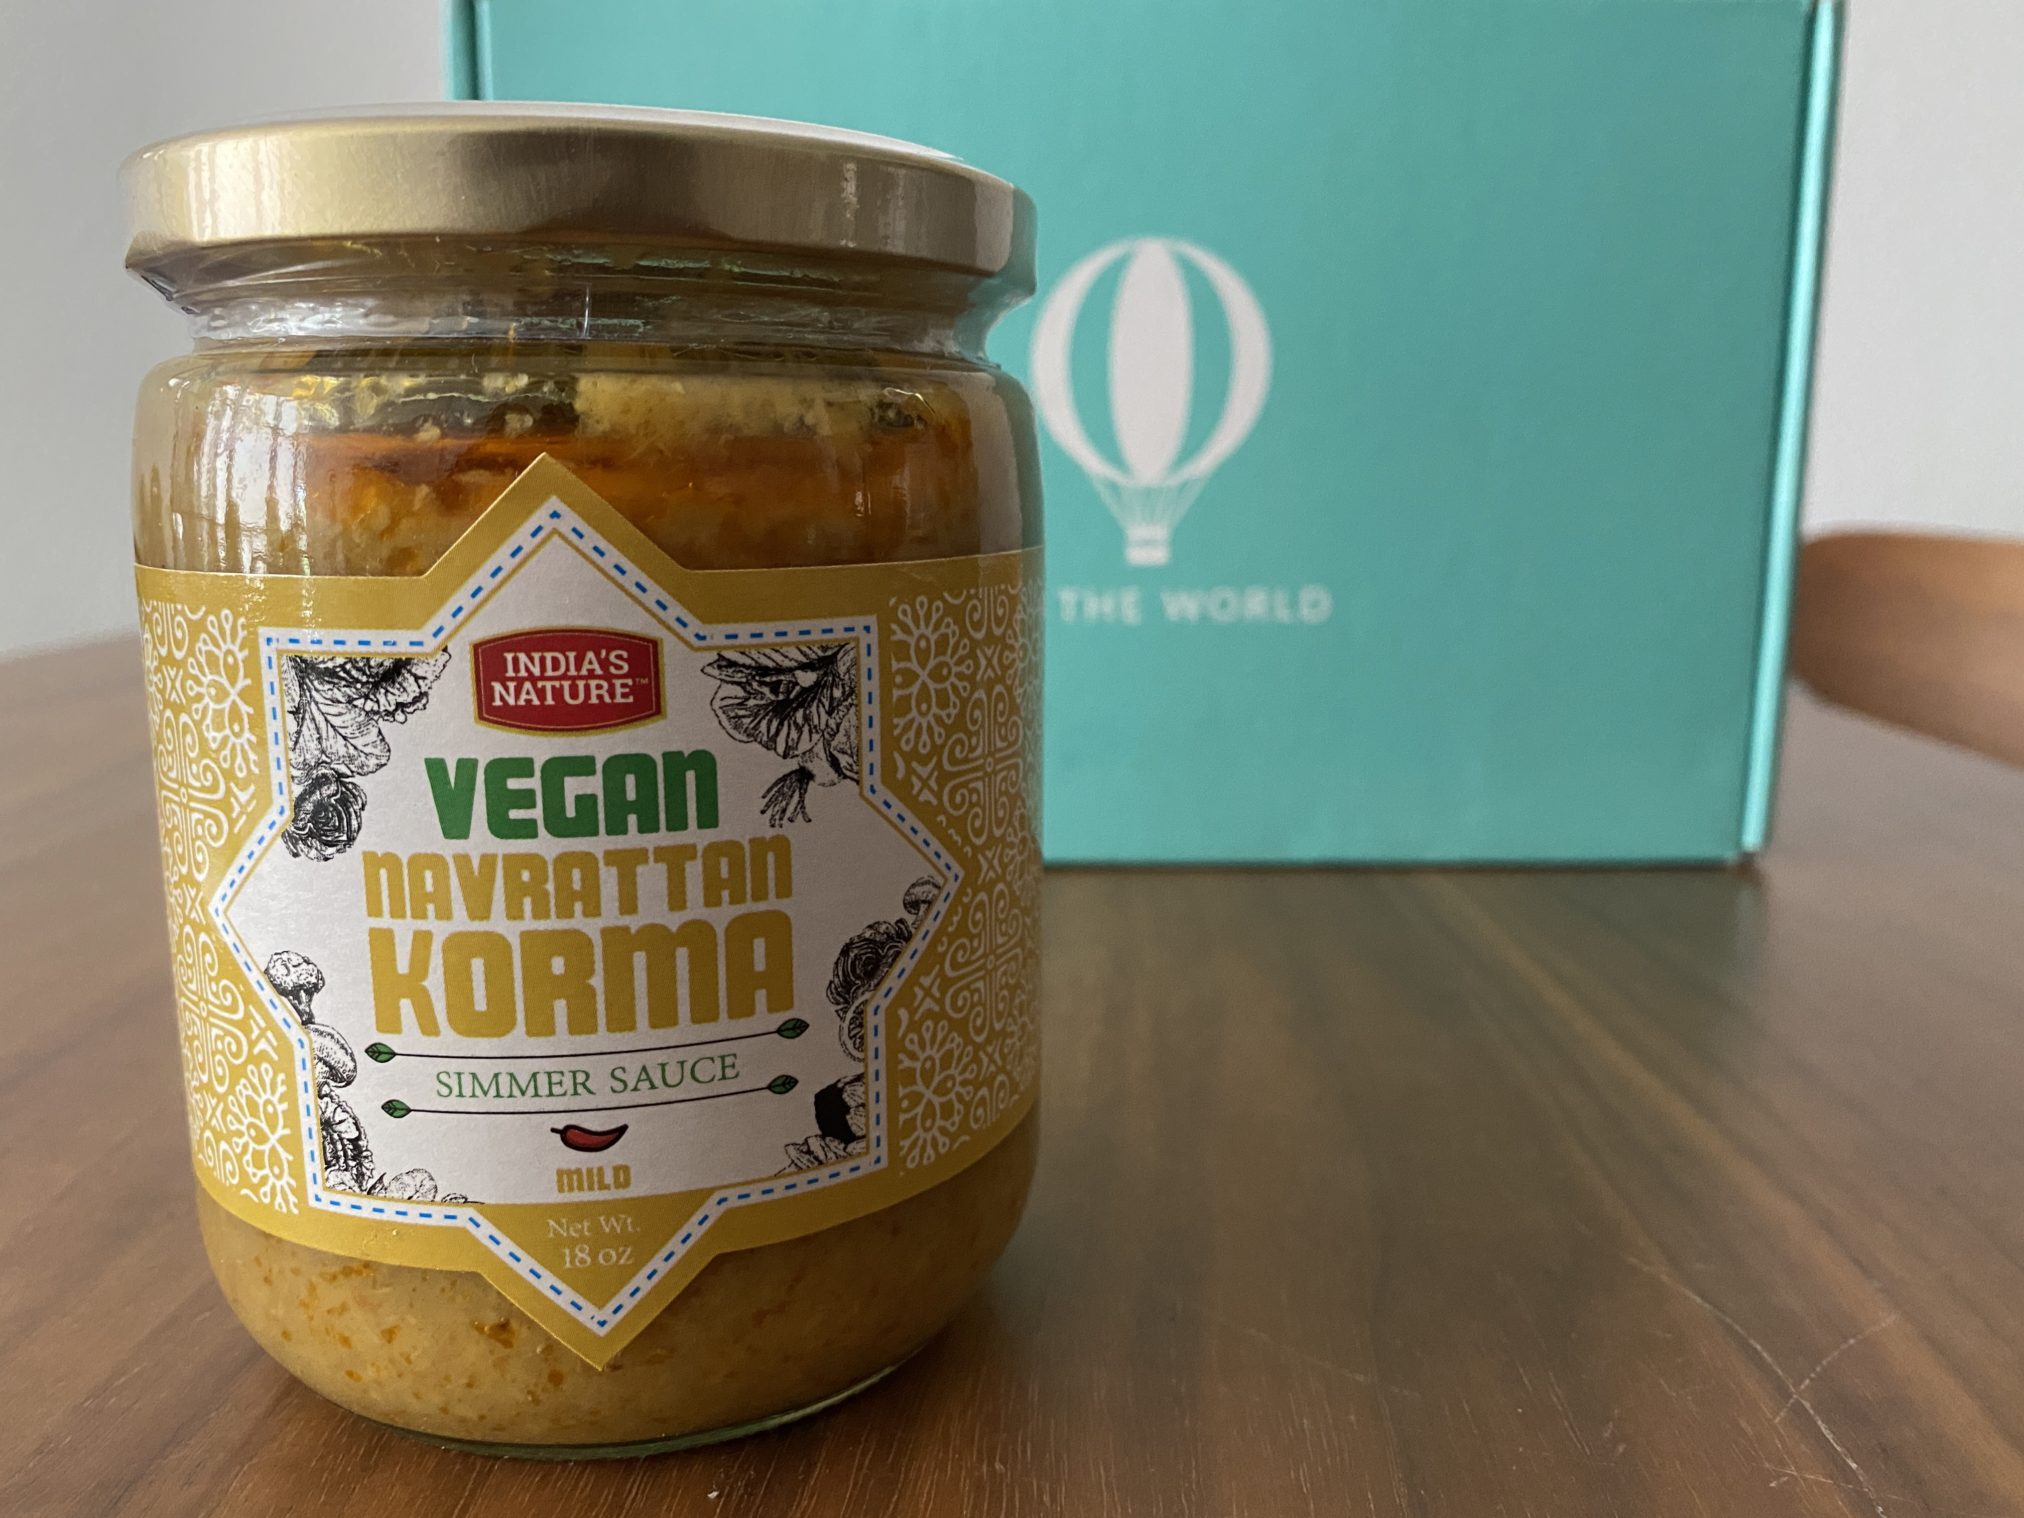 Vegan Navrattan Korma Simmer Sauce - Try The World Review - Is It Worth It? - SubscriptionBoxExpert